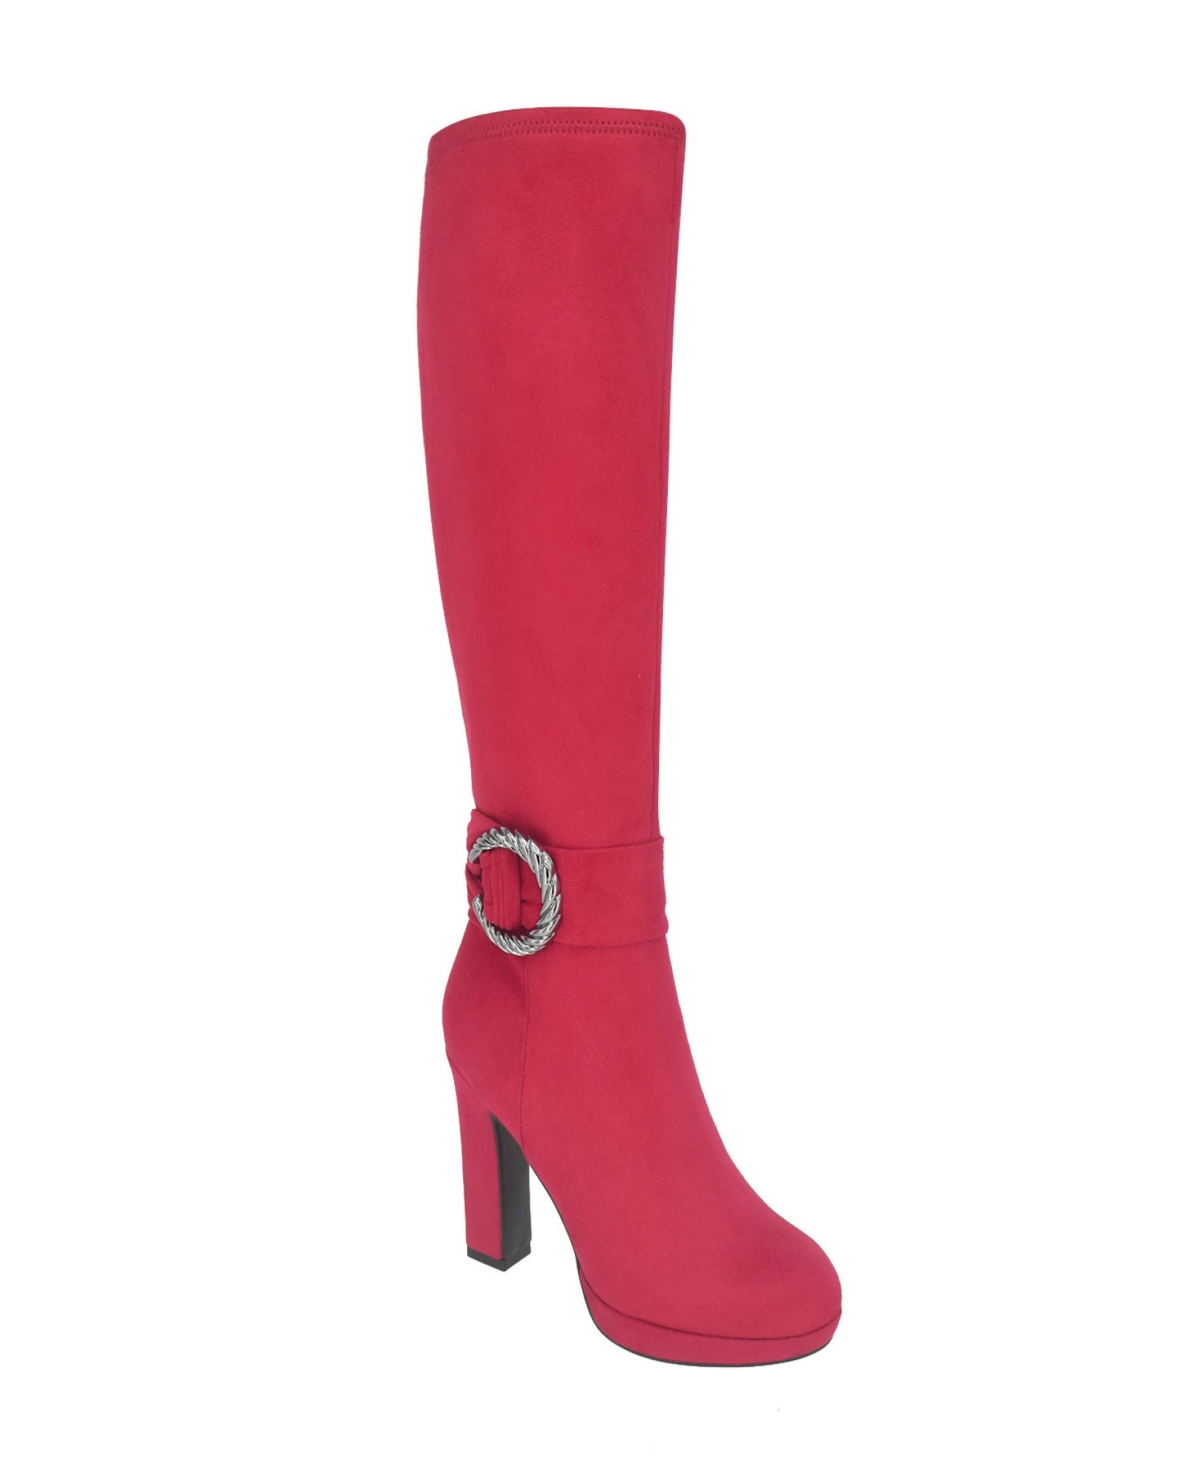 Women's Ovidia Stretch Platform Boots - Classic Red